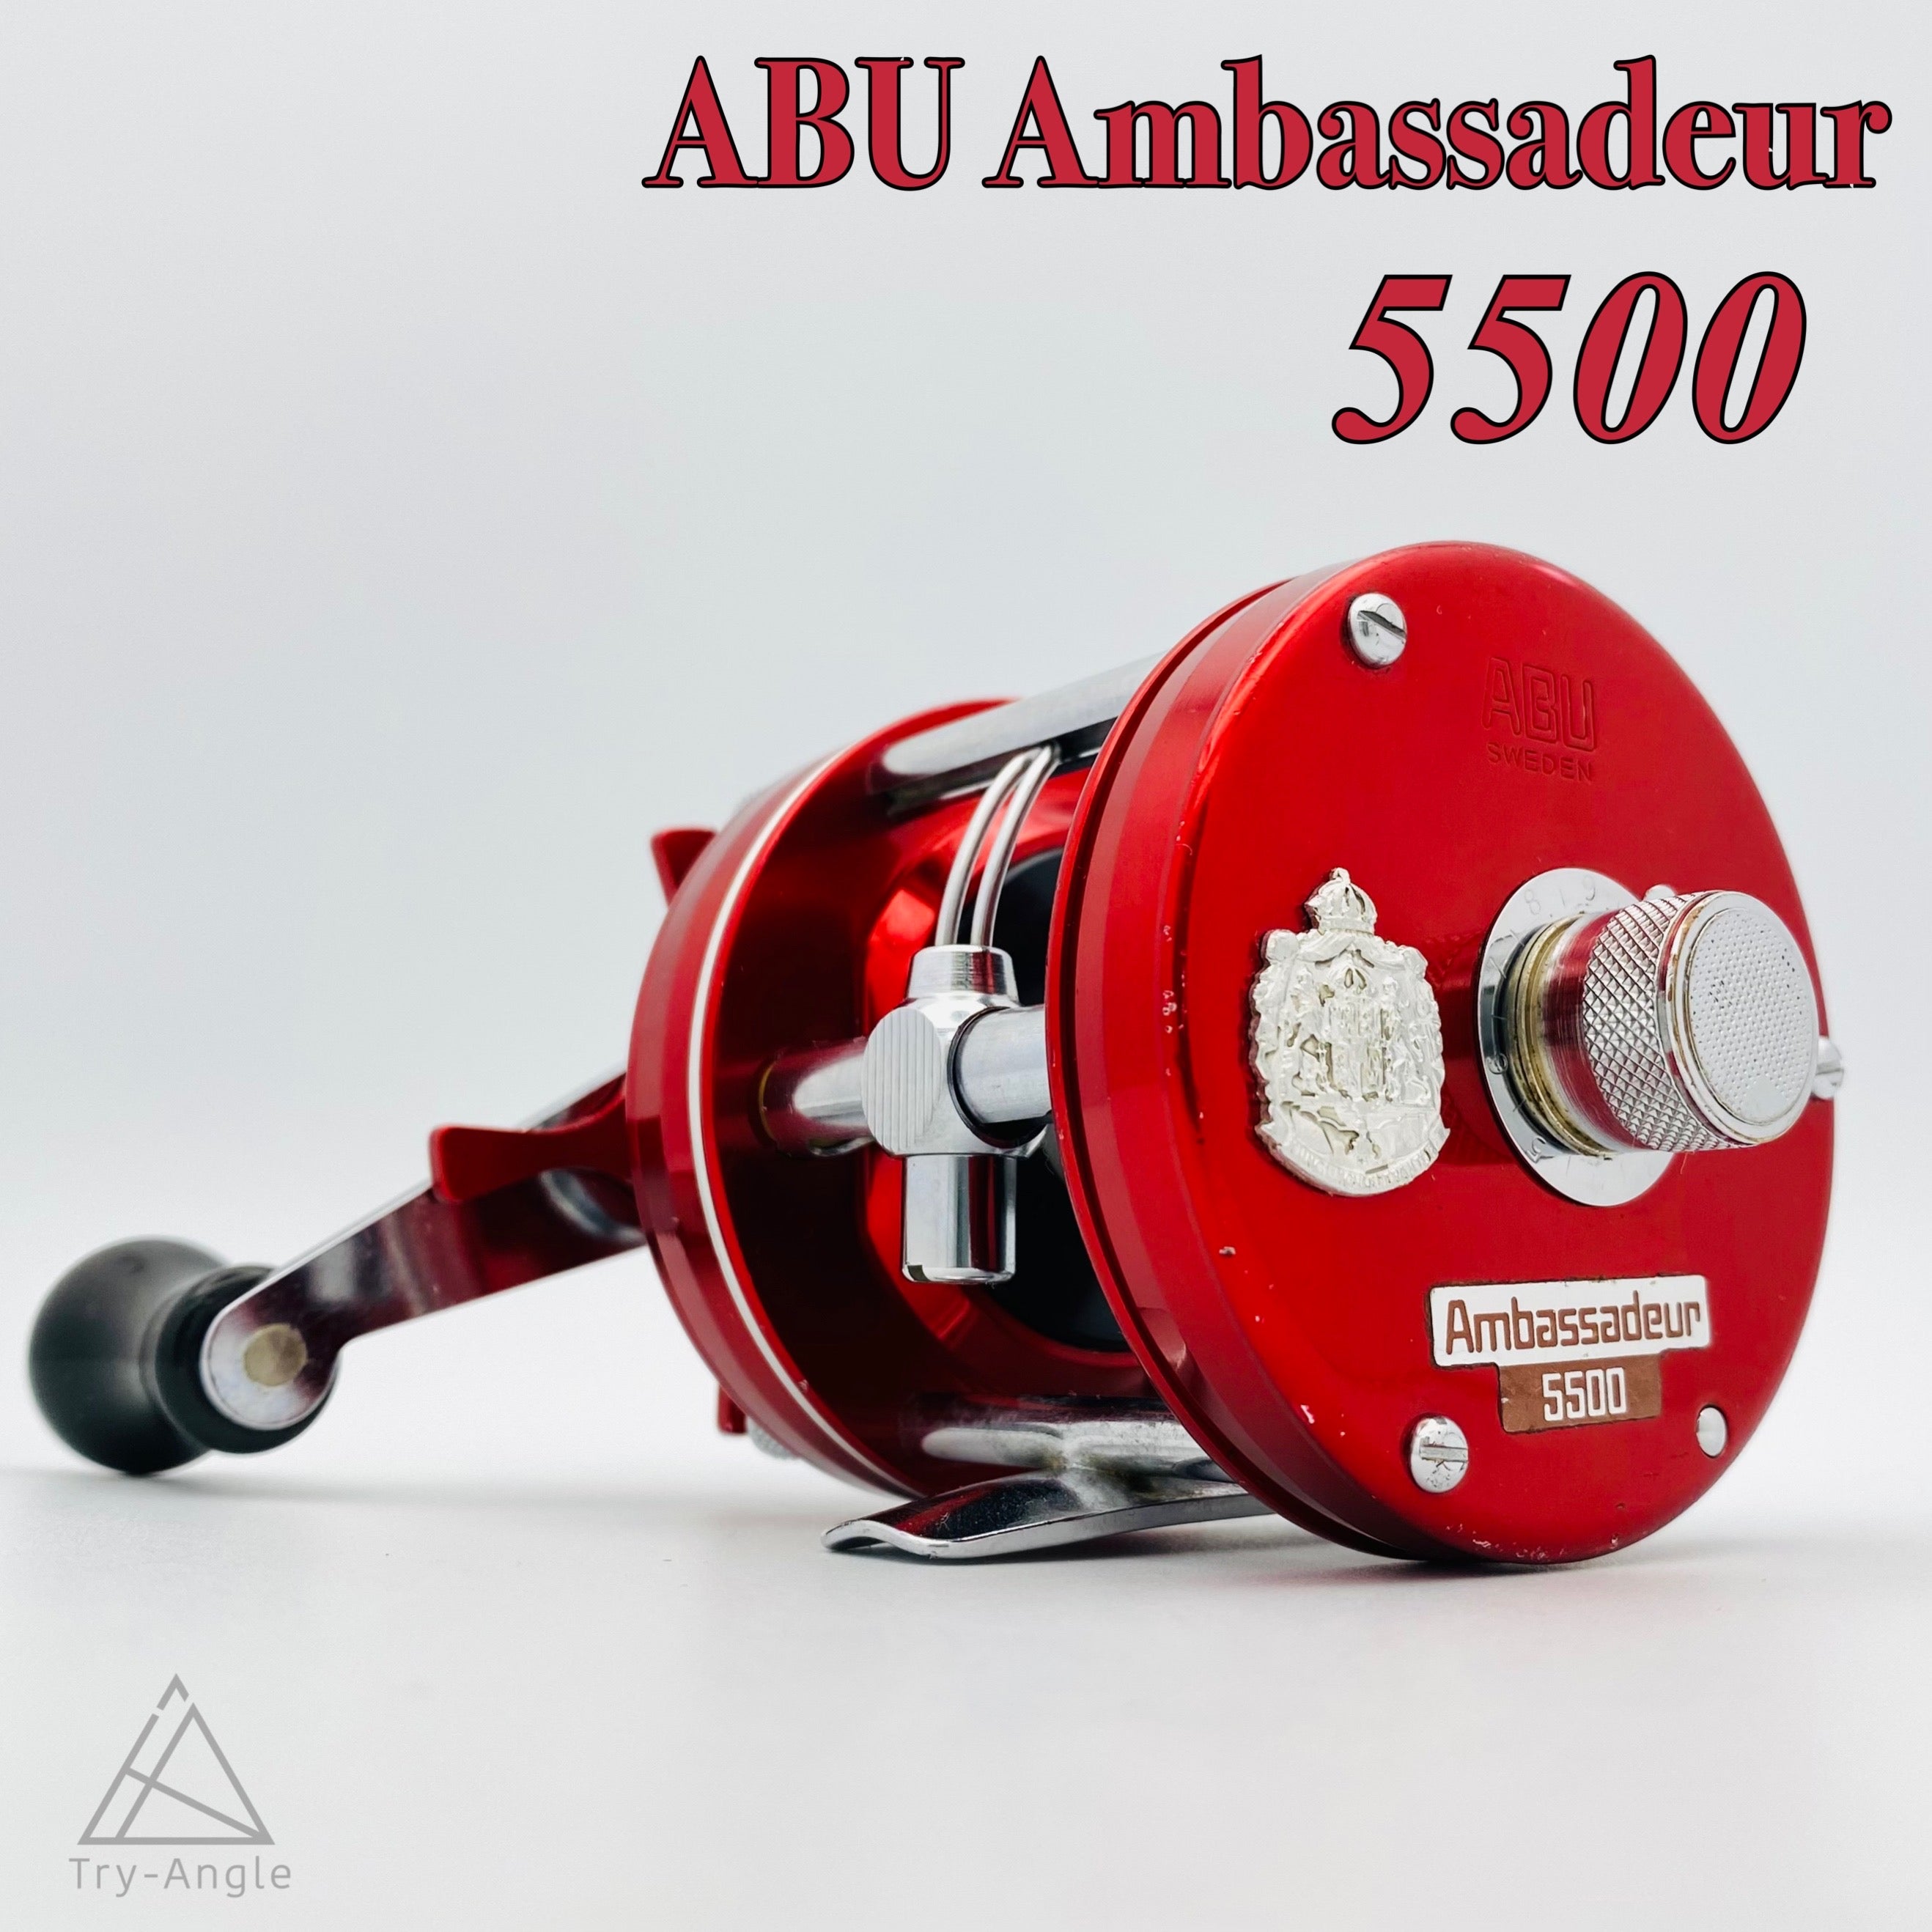 Abu Ambassadeur 5500 Cherry red 800301 (A)